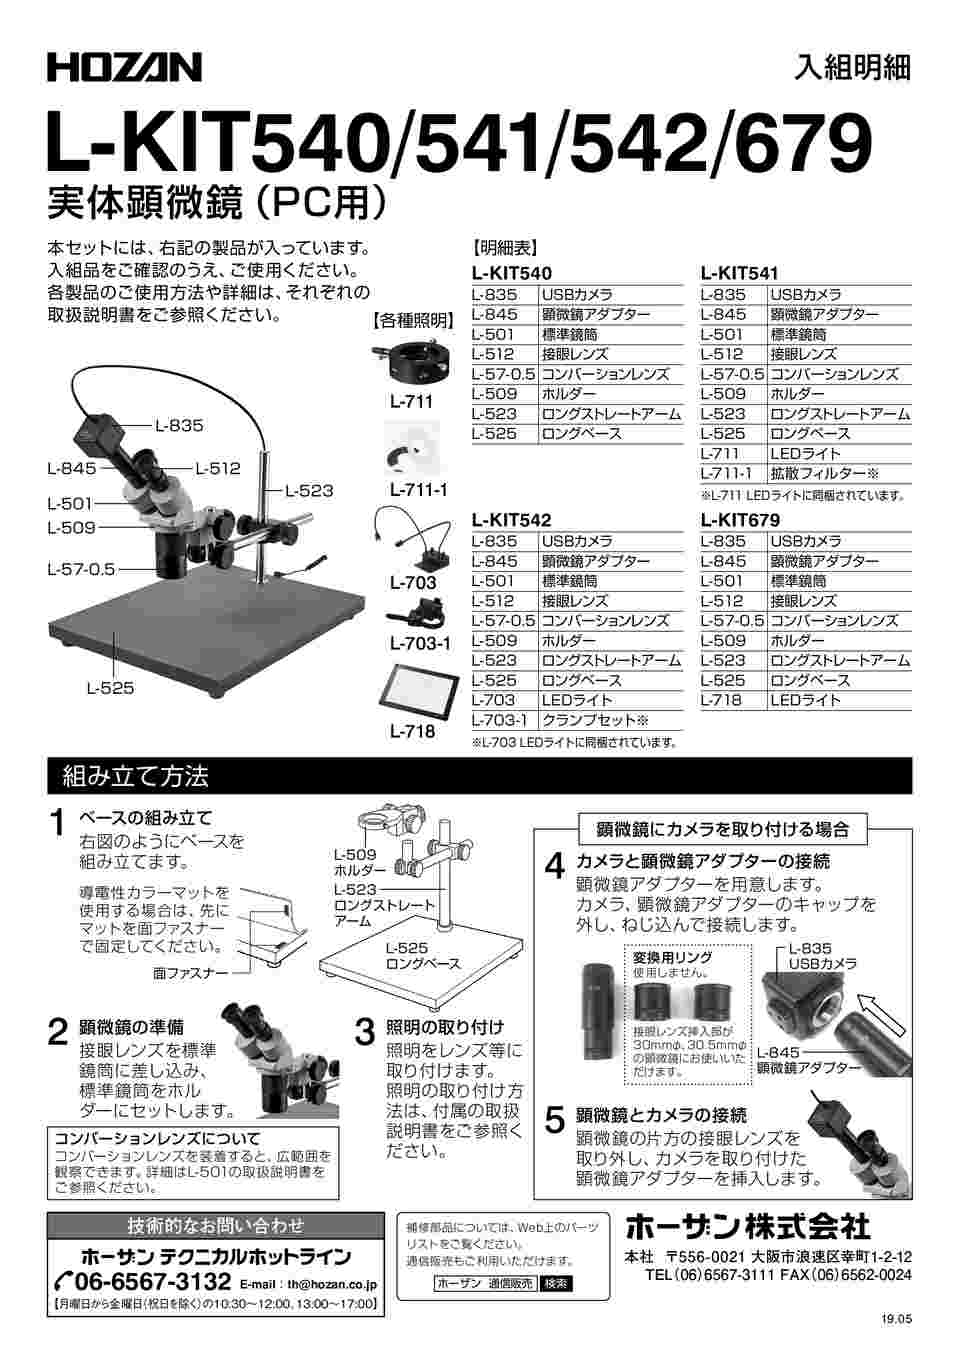 HOZAN ホーザン(HOZAN) 実体顕微鏡 PC用 L-KIT679 ガーデンファニチャー